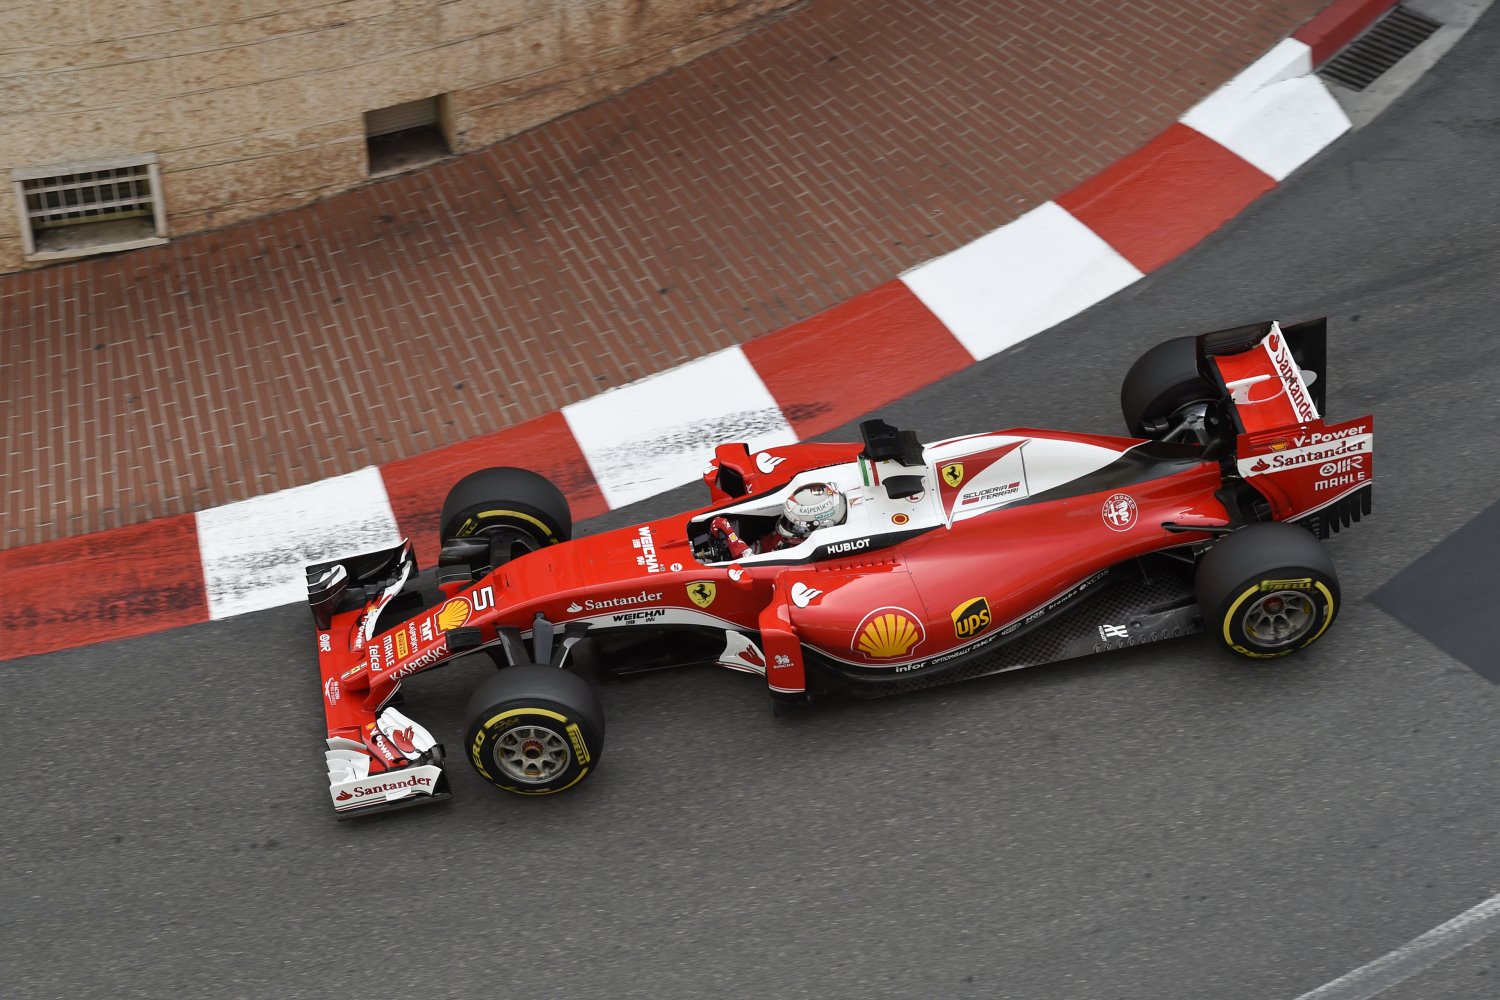 SSantander may stay with mid-fielder Ferrari